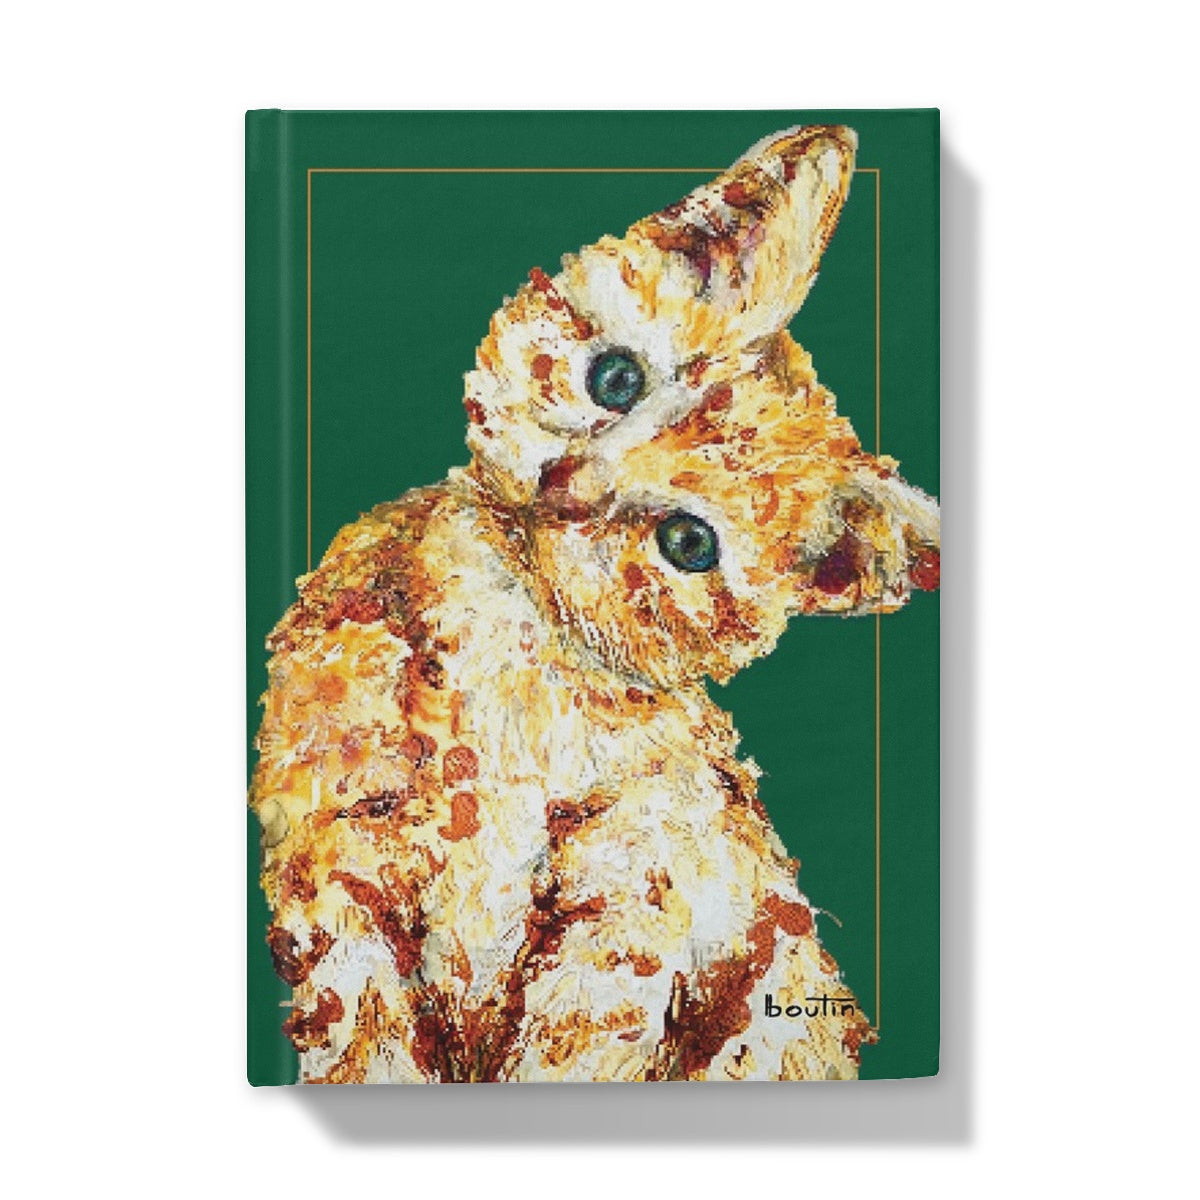 Sophia fir - Notebook by the artist Boutin